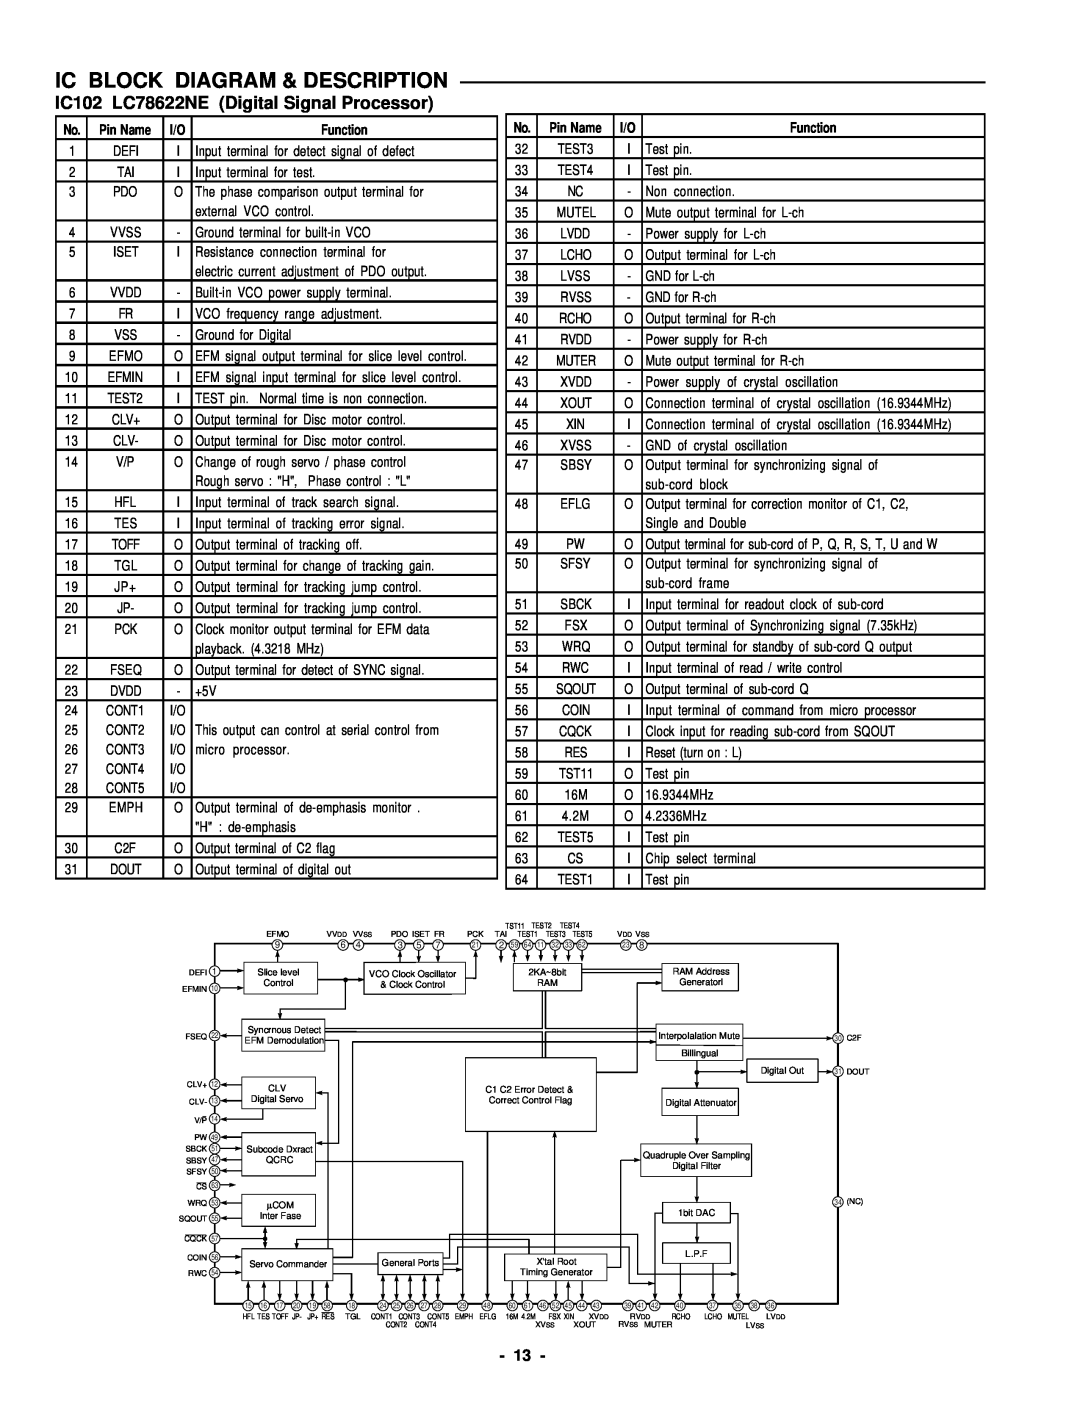 Sanyo DC-DA370 service manual IC102 LC78622NE Digital Signal Processor, Ic Block Diagram & Description, Function 